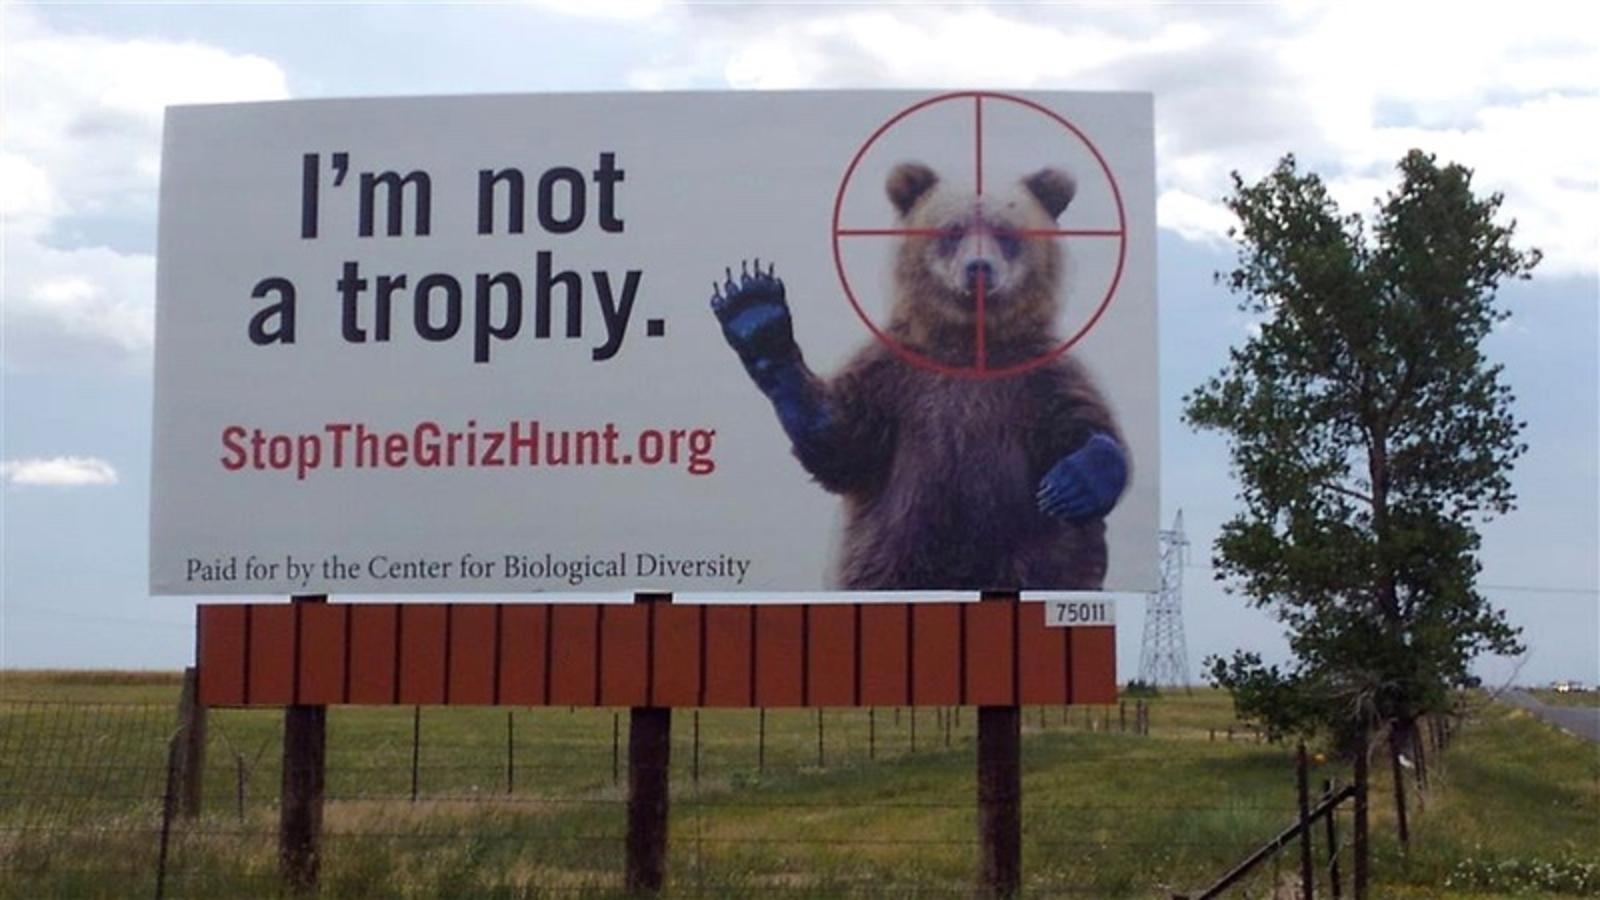 Billboard message from Center for Biological Diversity